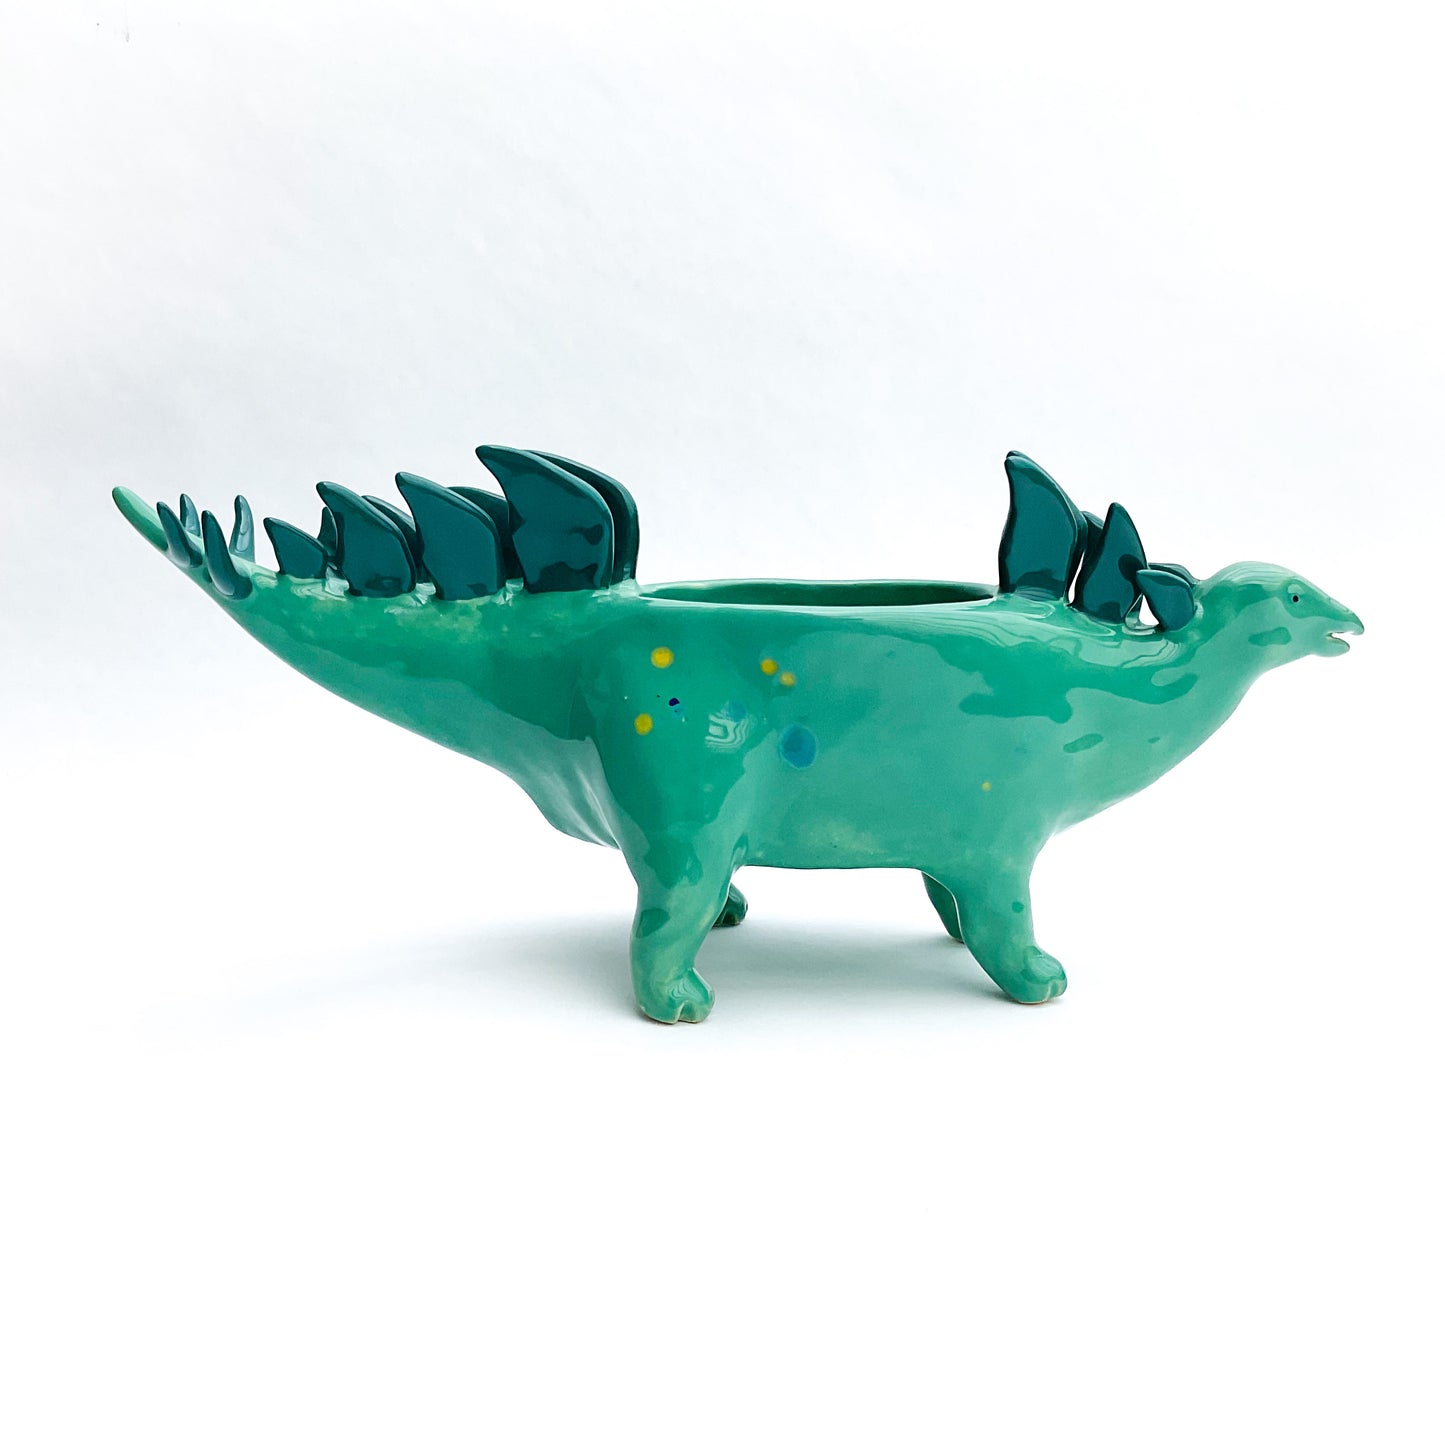 Speckled Turquoise Stegosaurus Dinosaur Planter